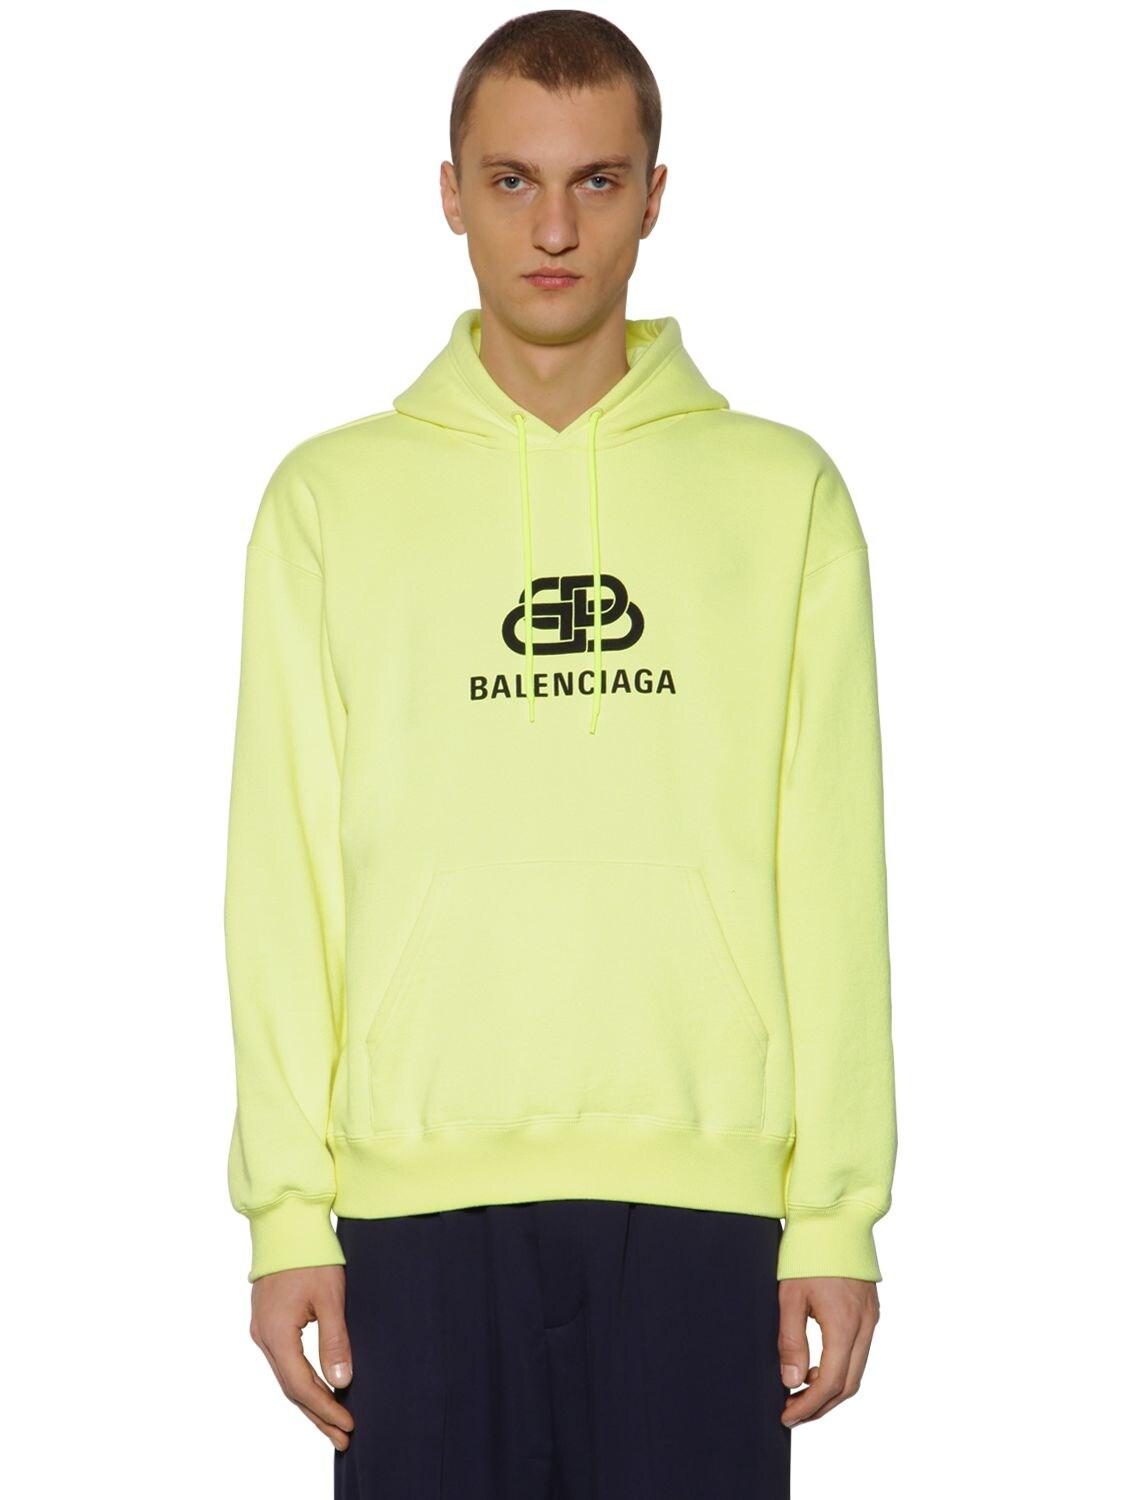 Balenciaga Logo Cotton Sweatshirt Hoodie in Yellow for Men - Lyst